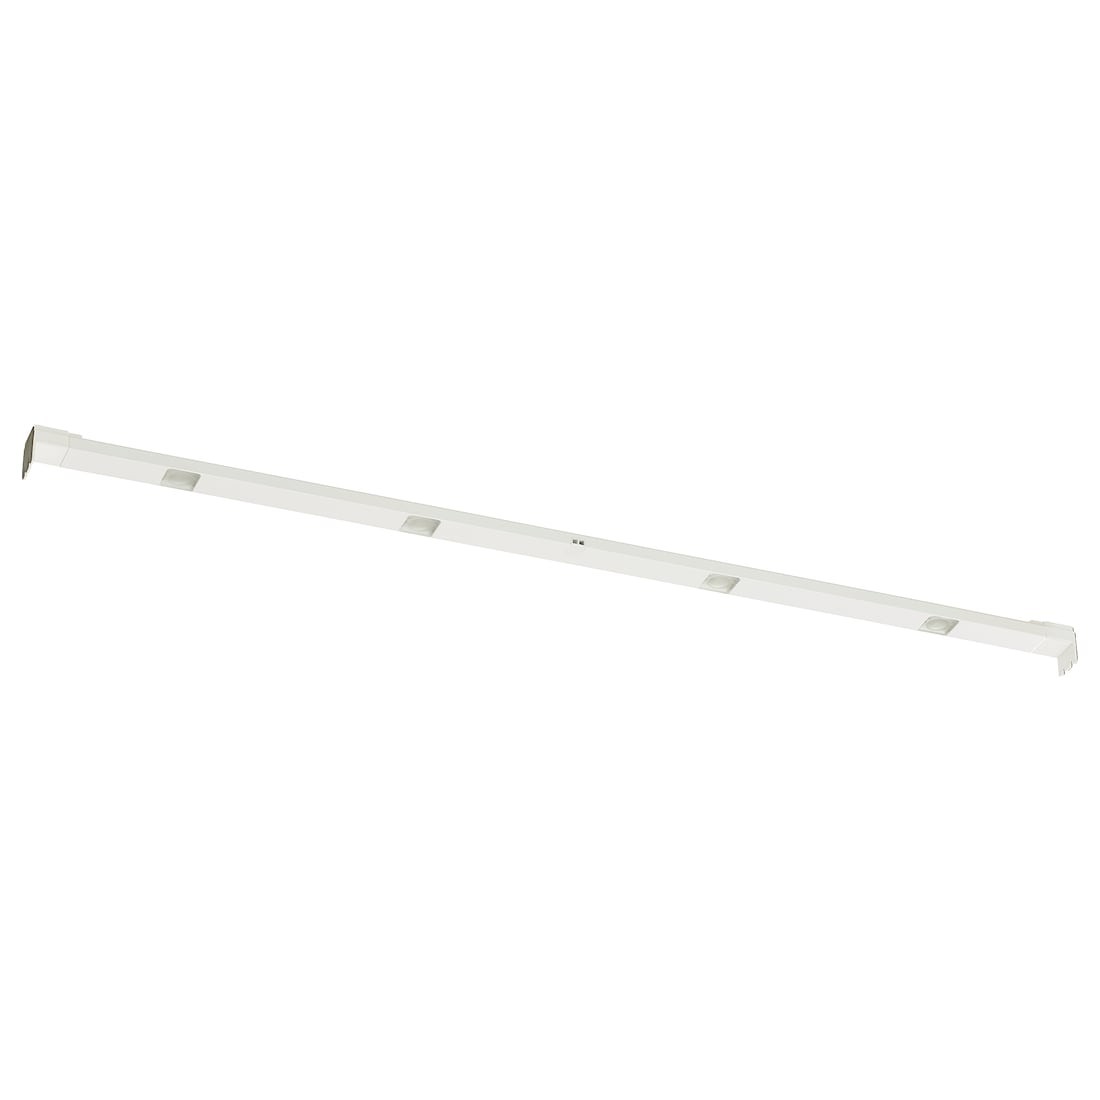 IKEA MITTLED МИТЛЕД Светодиодная LED подсветка ящика с датчиком, белый, 76 см 70529210 705.292.10